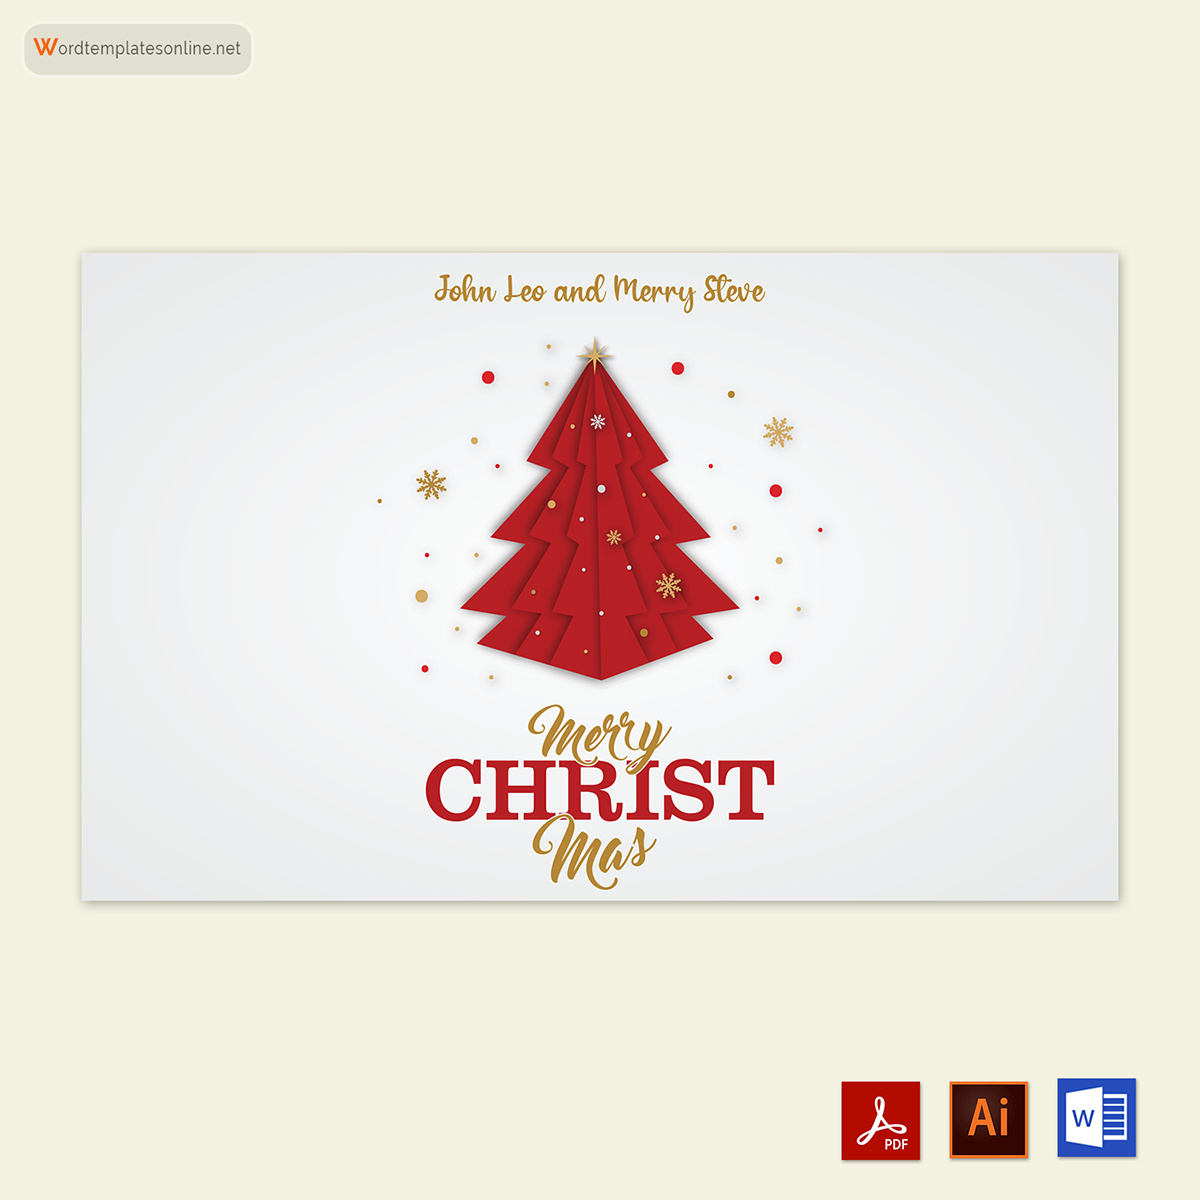 Christmas card design
